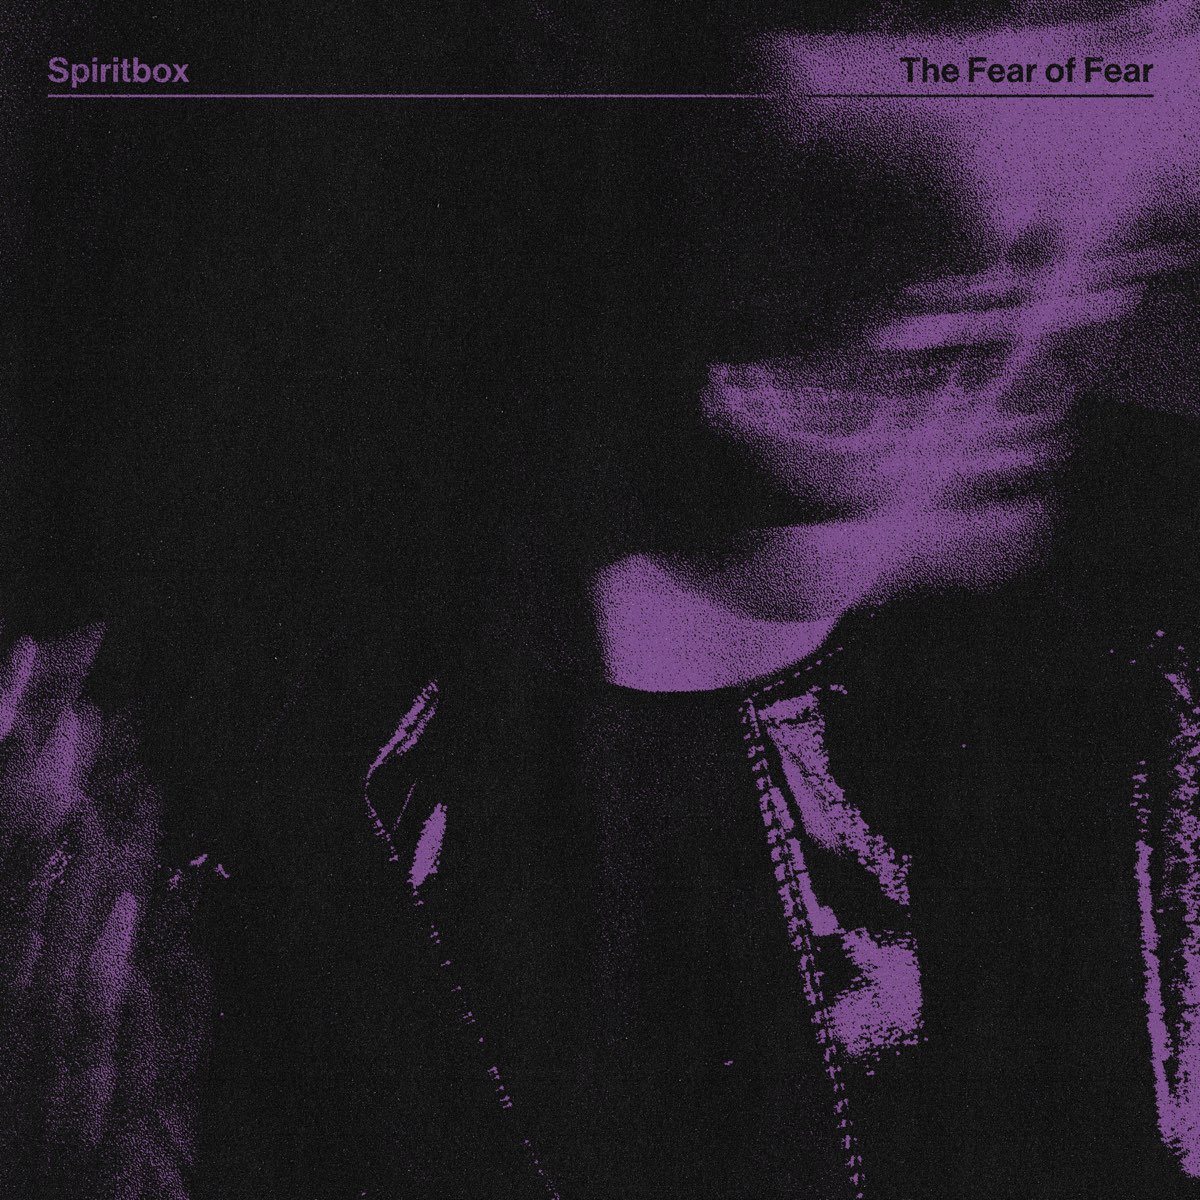 Spiritbox ‘The Fear of Fear’ album artwork